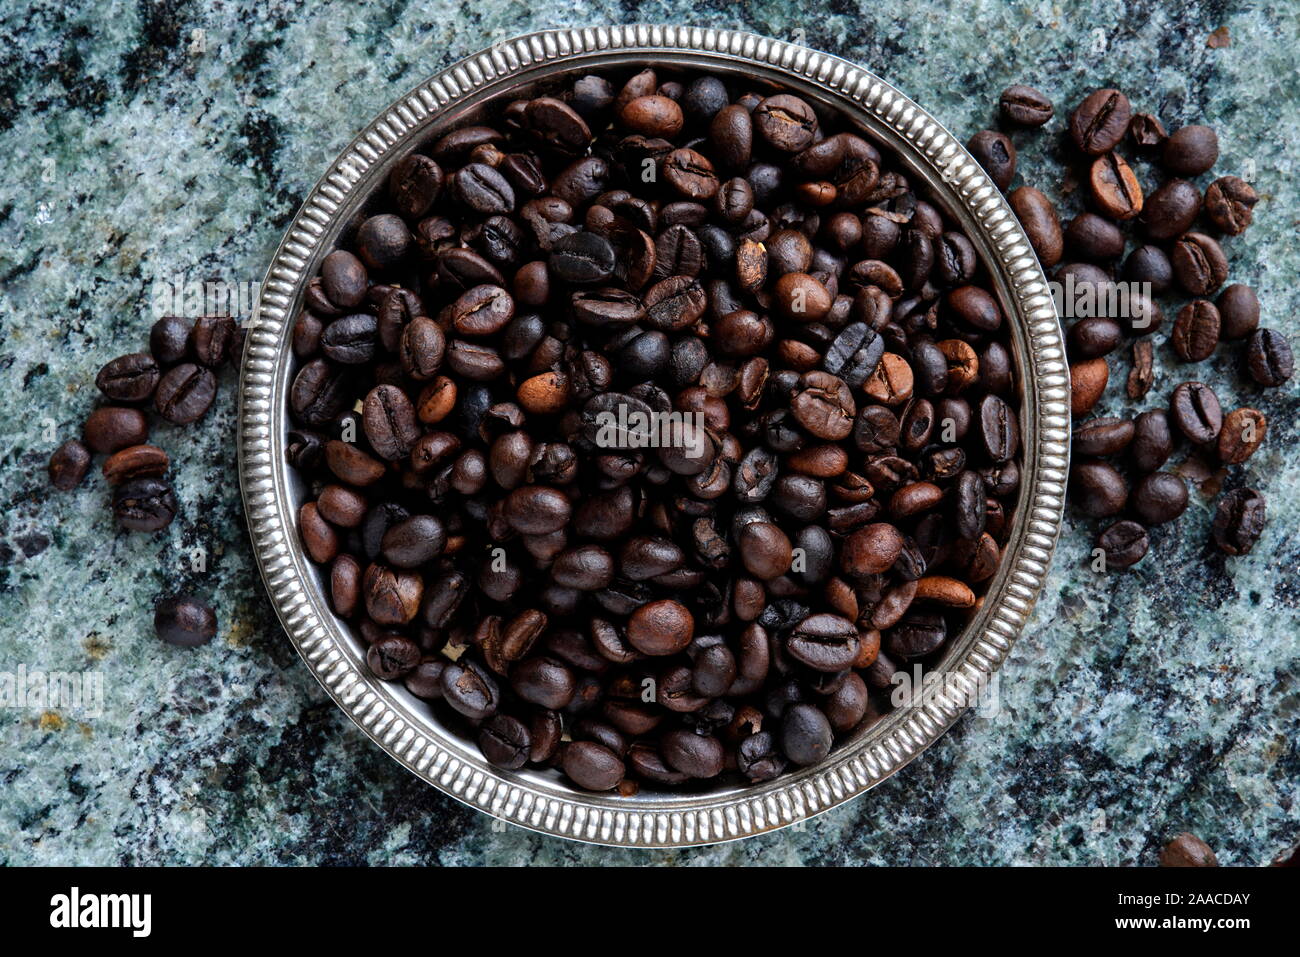 roasted coffee beans, India, Asia Stock Photo